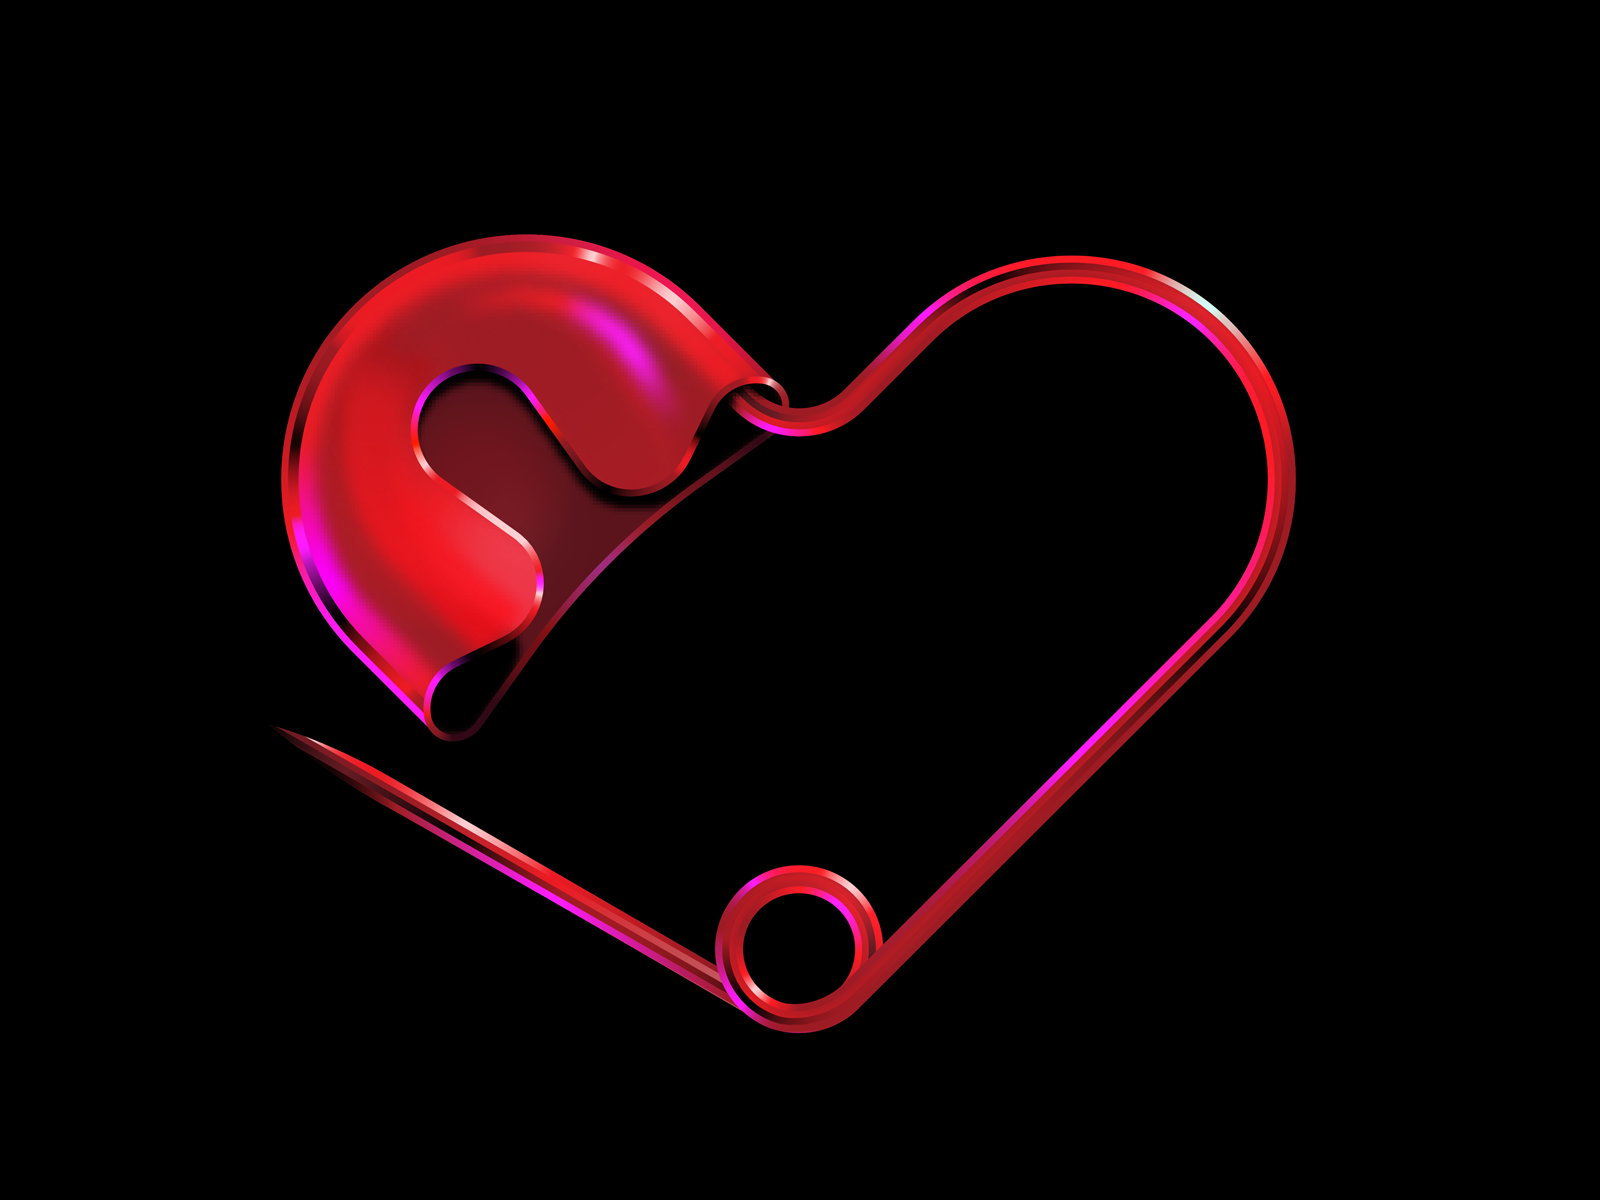 Heart Pin design heart illustration love metal pin red symbol vector